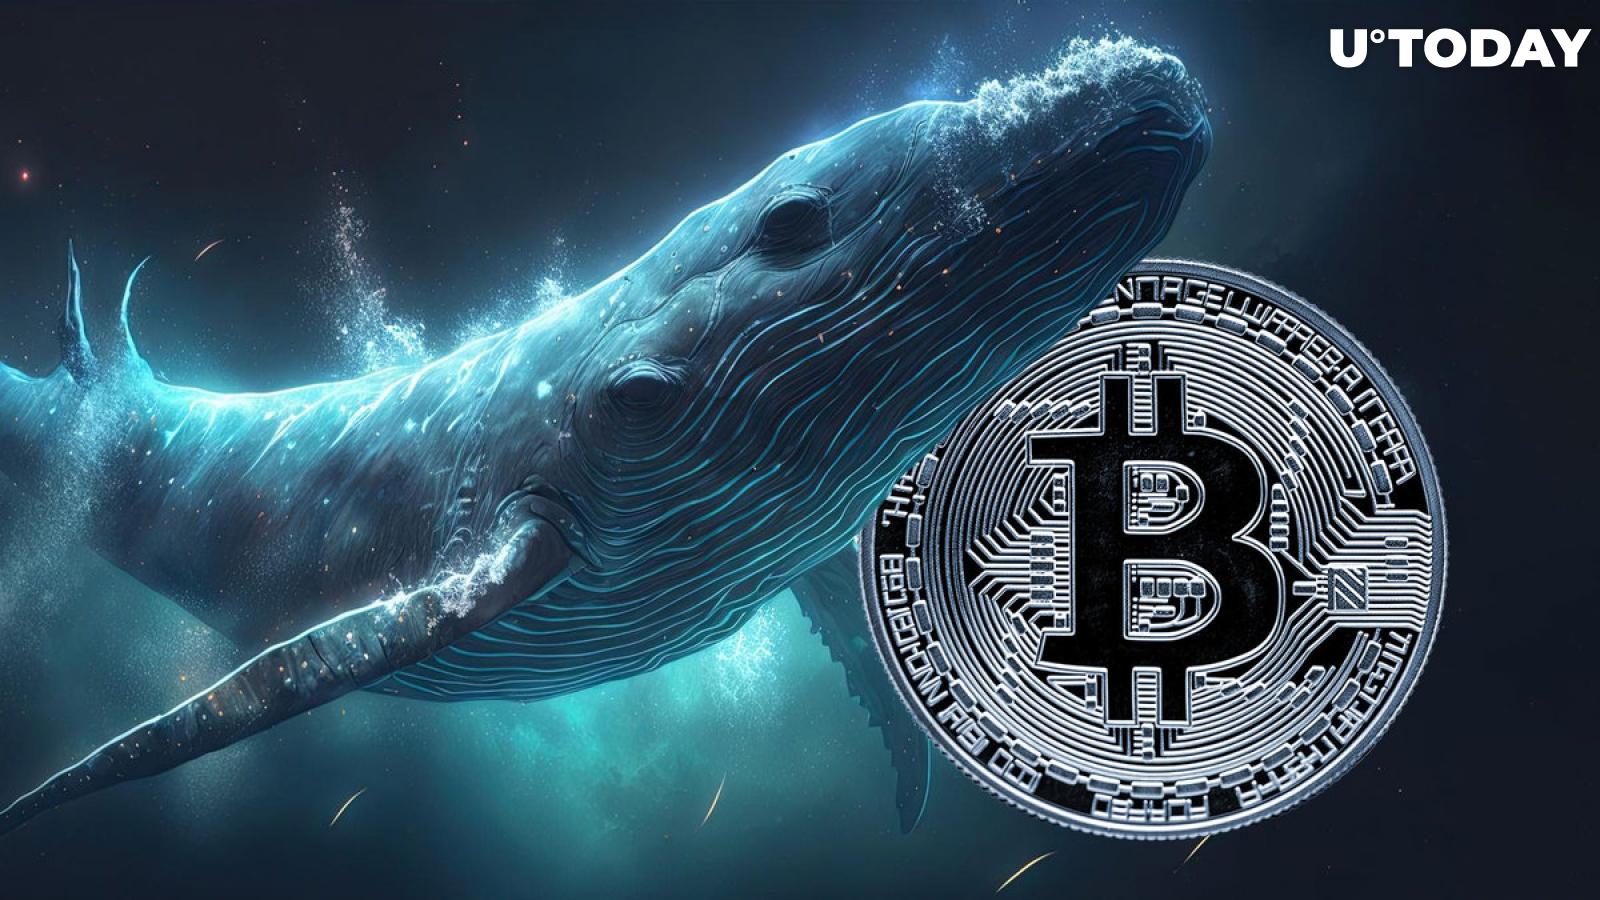 Bitcoin (BTC) Whales Increase Holdings Despite Price Volatility: Details